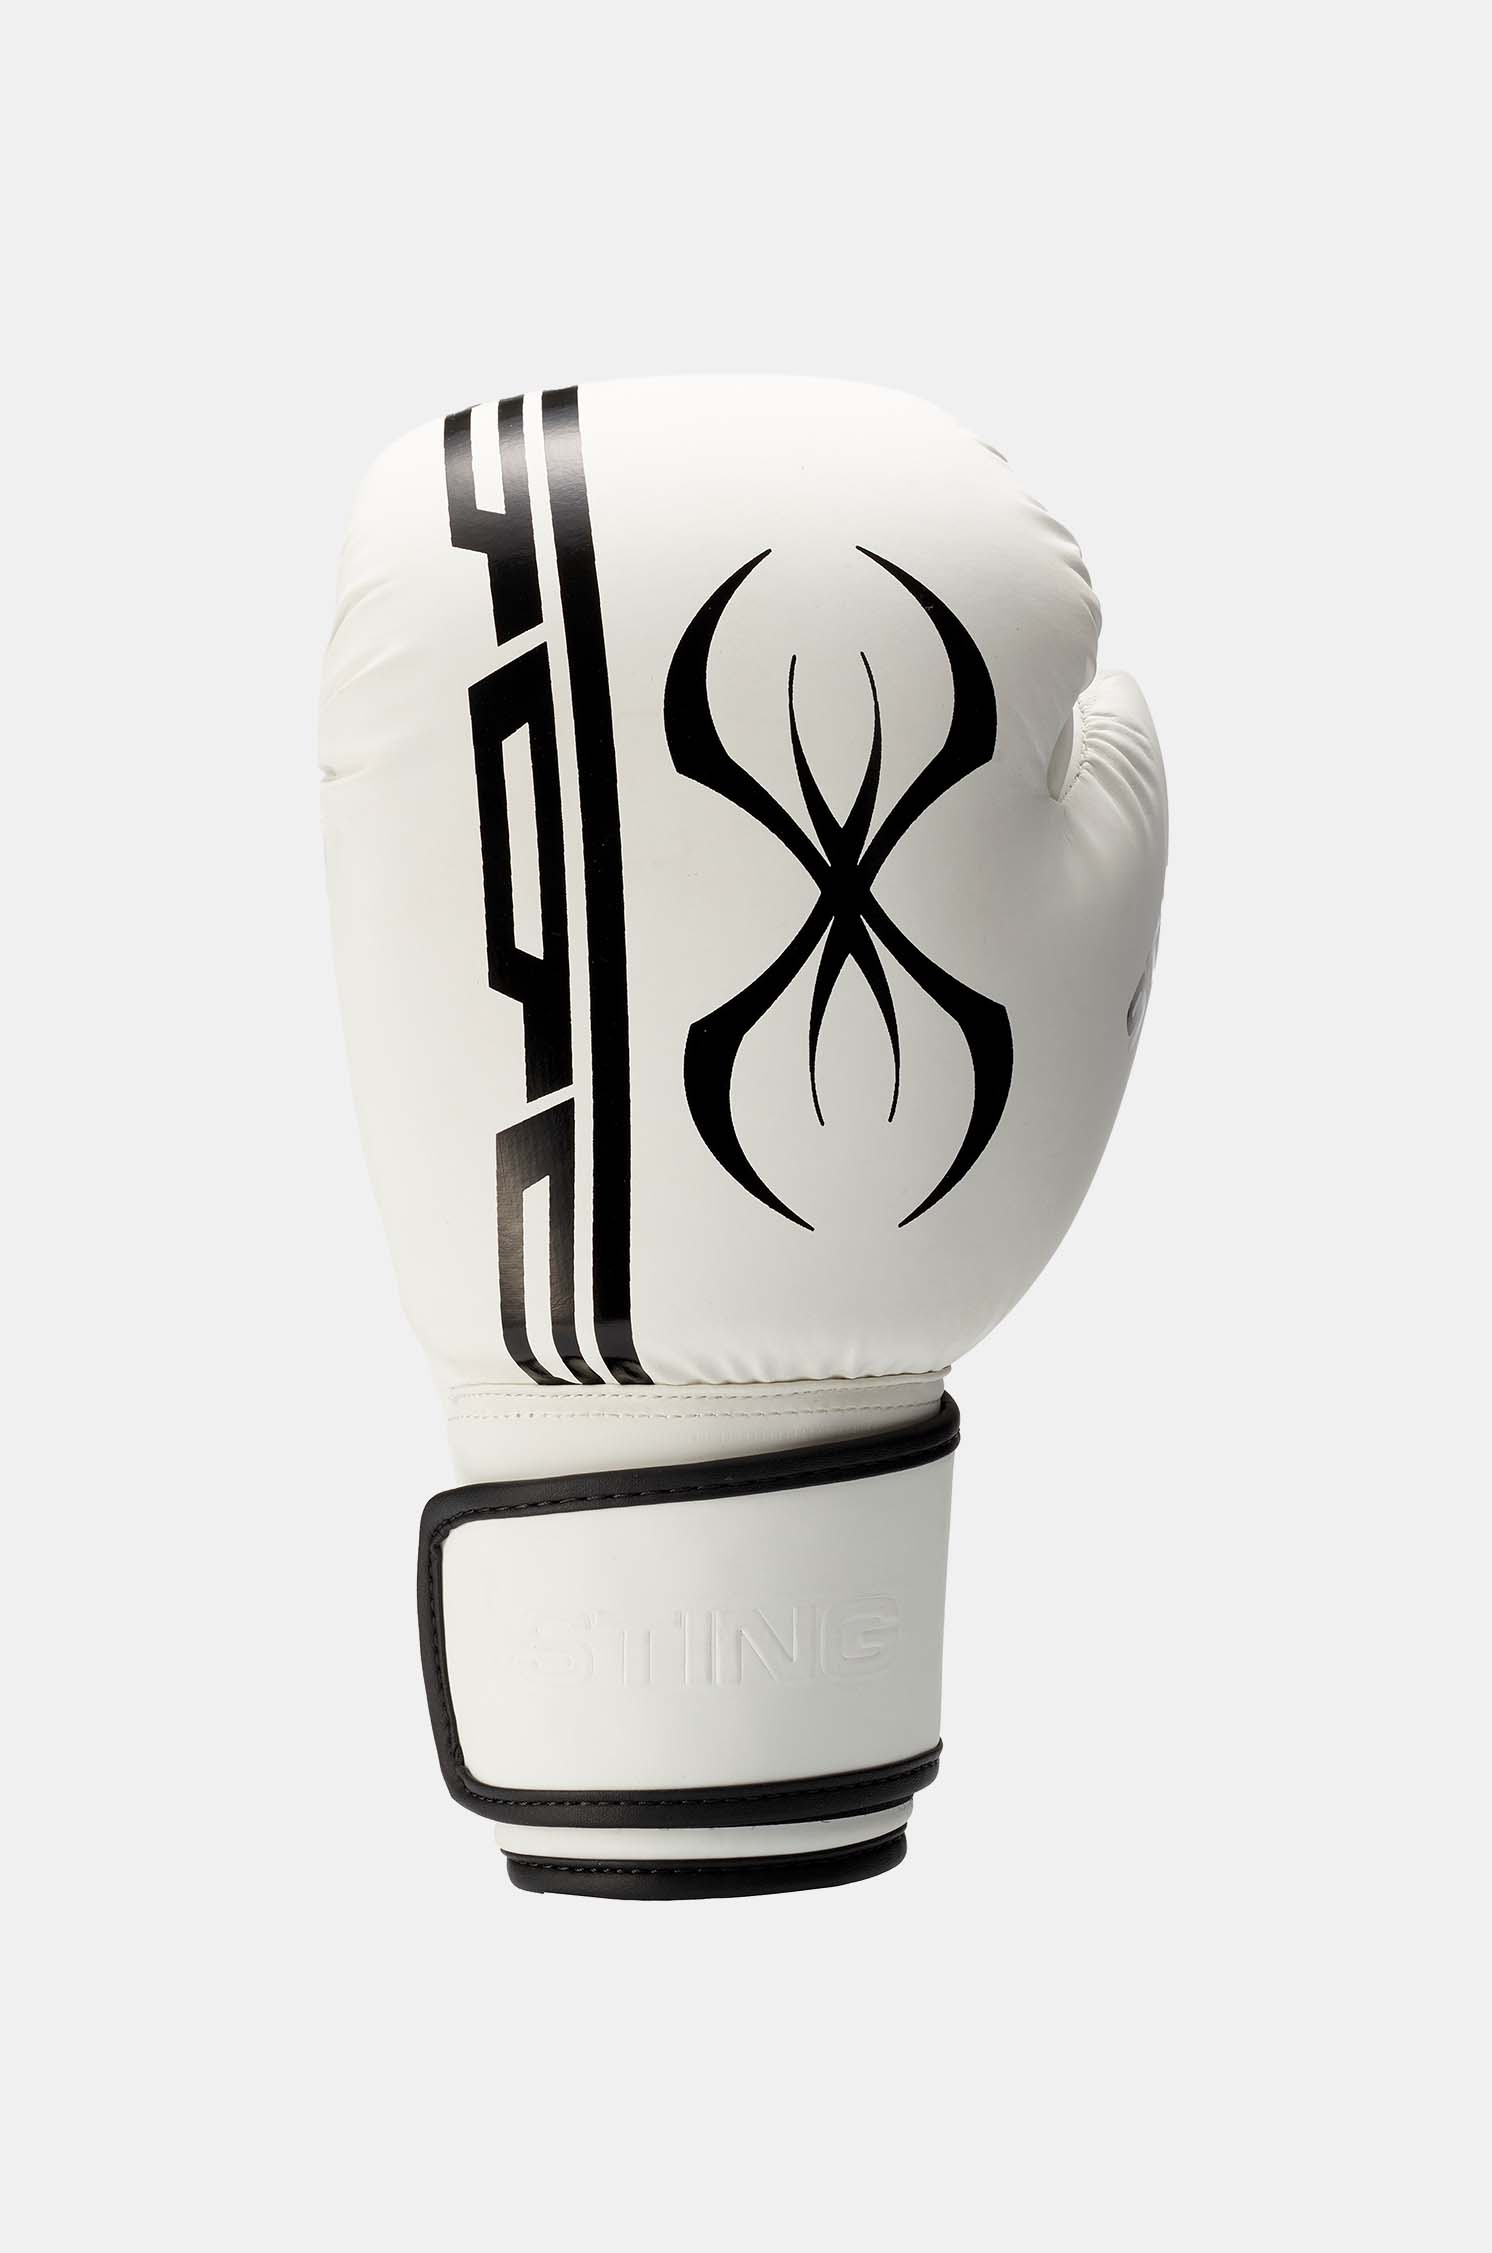 Armaplus Boxing Glove